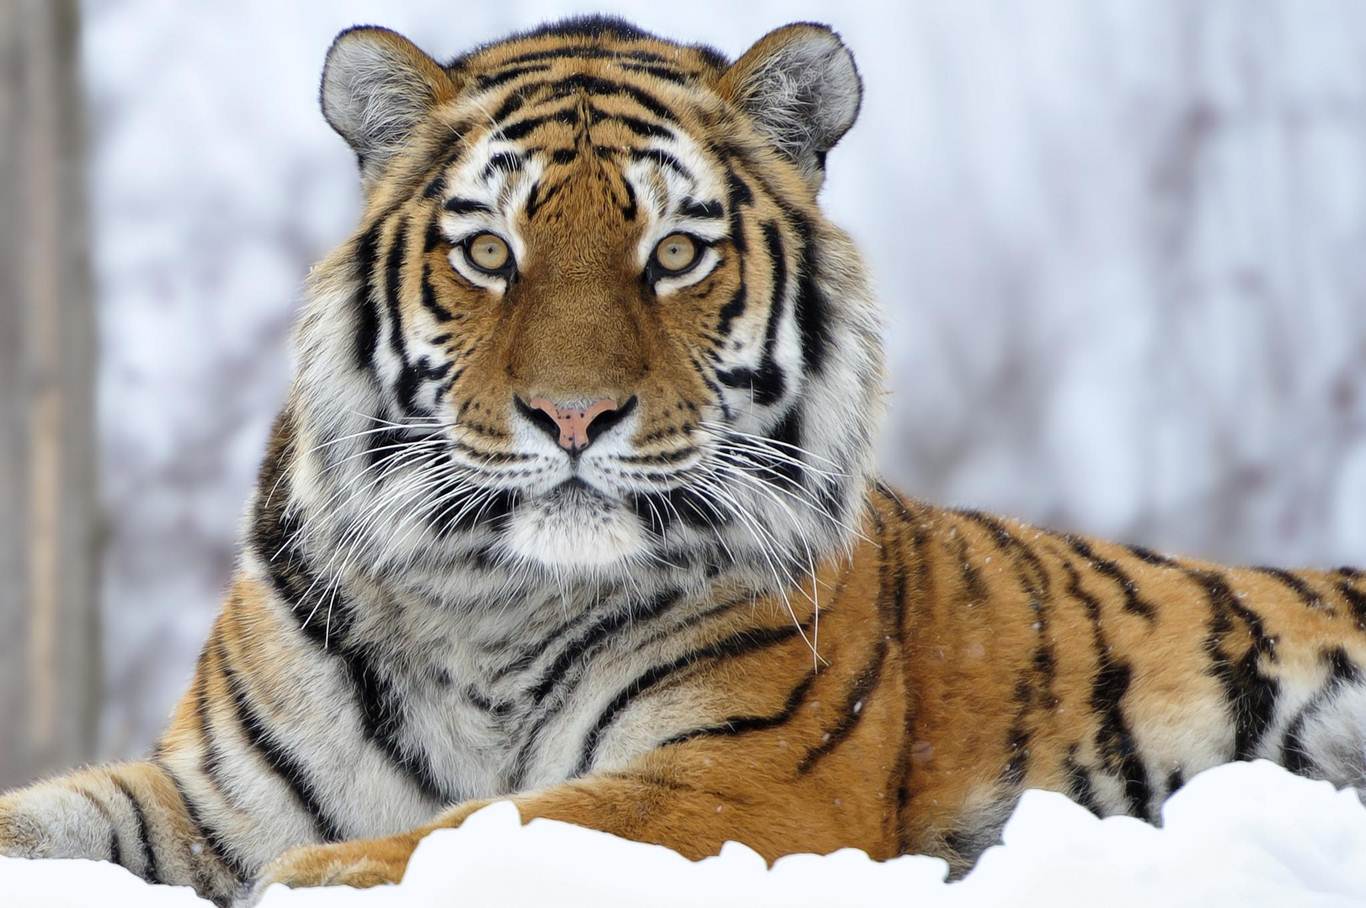 kaplan wallpaper,tiger,tierwelt,landtier,bengalischer tiger,sibirischer tiger